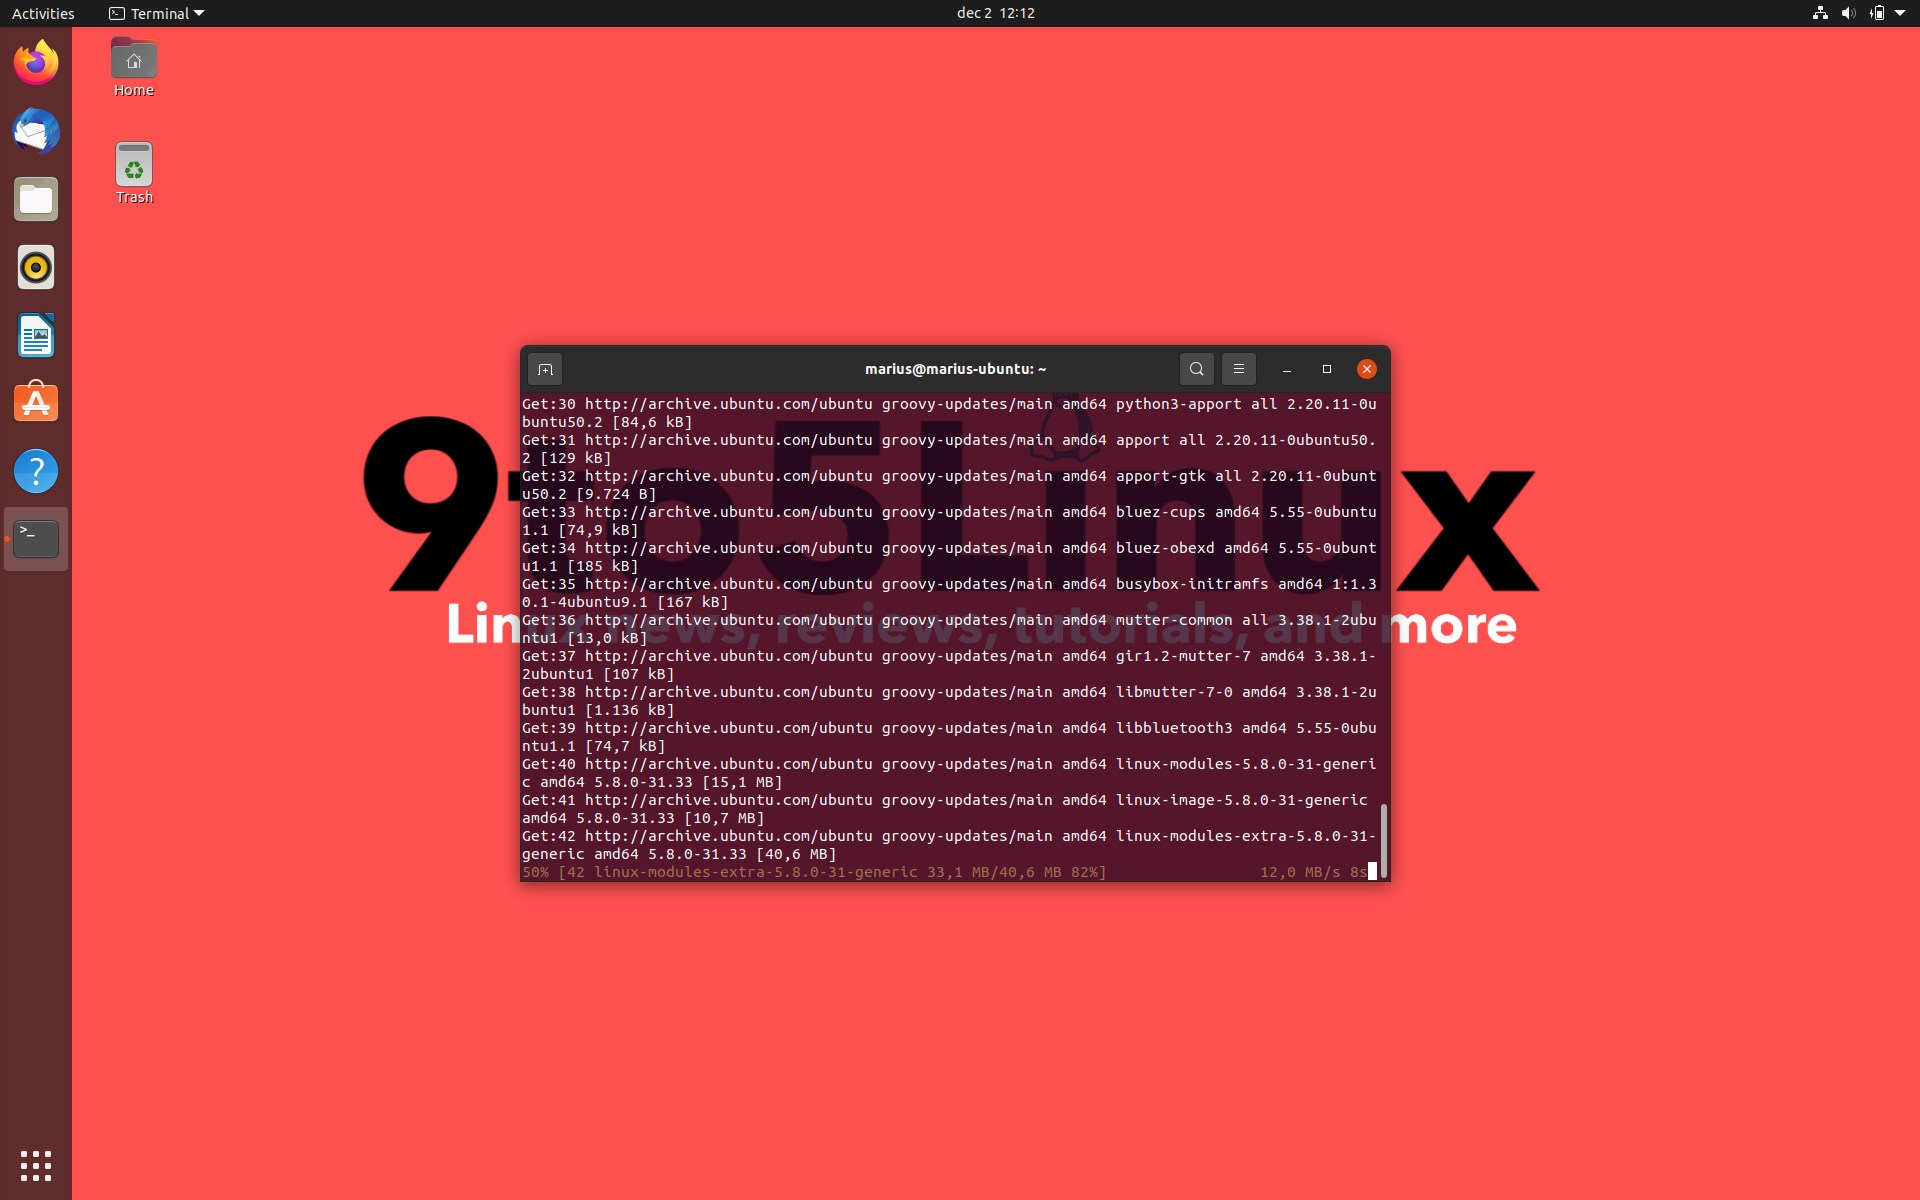 Ubuntu 6221-1: Linux kernel vulnerabilities